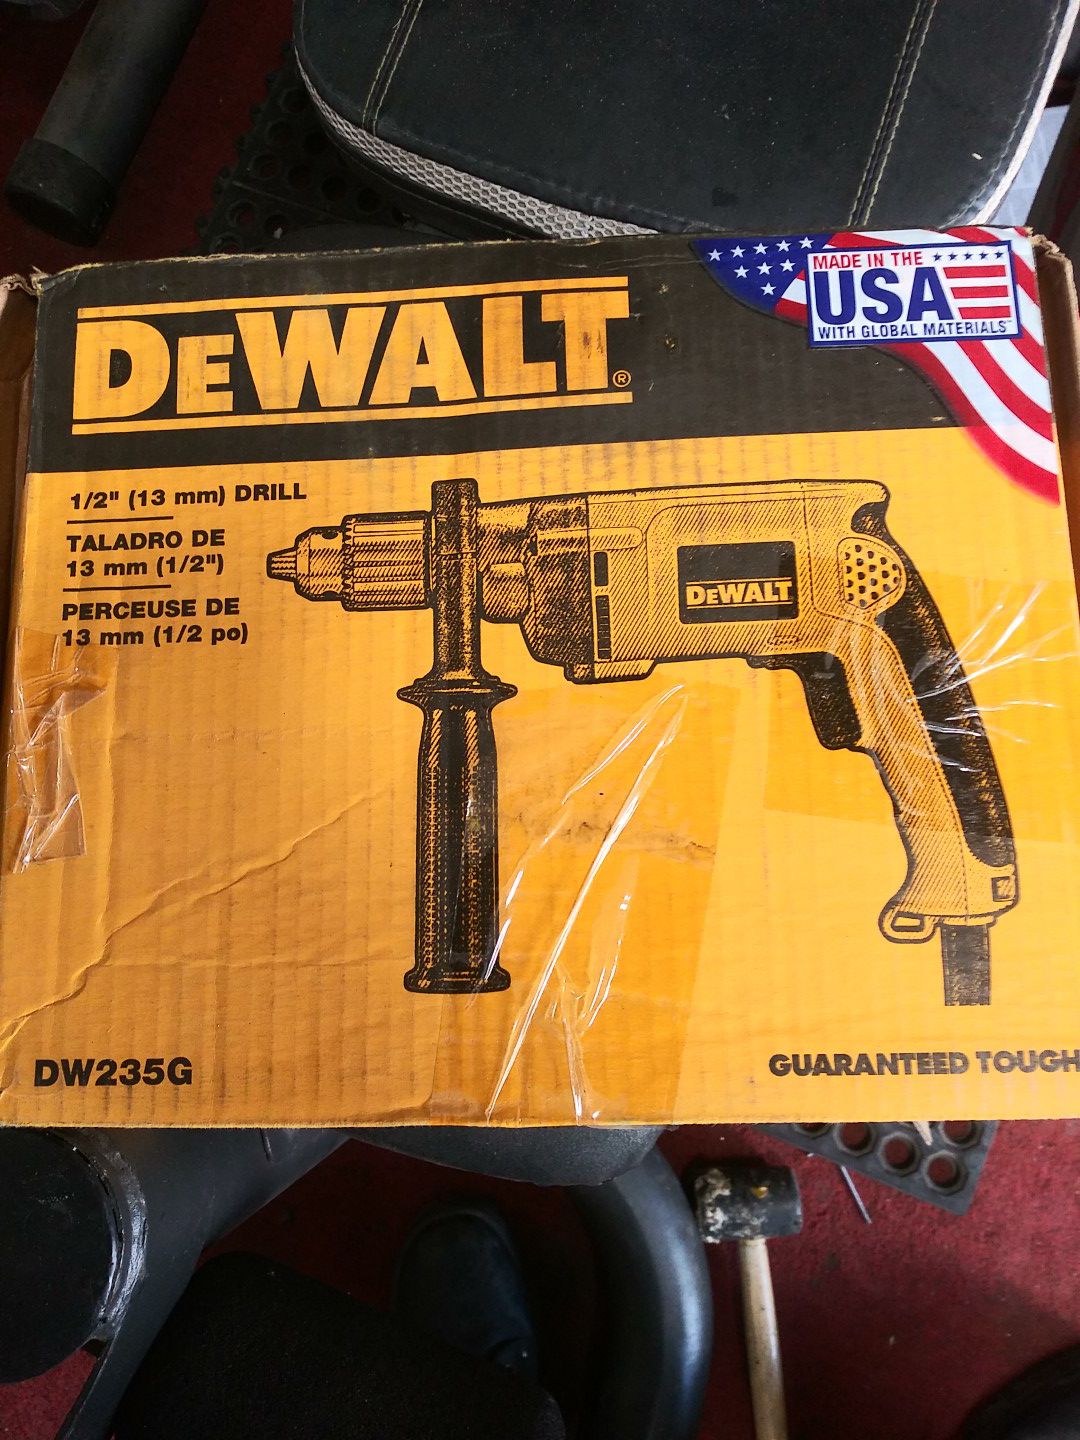 Dewalt corded Drill $35